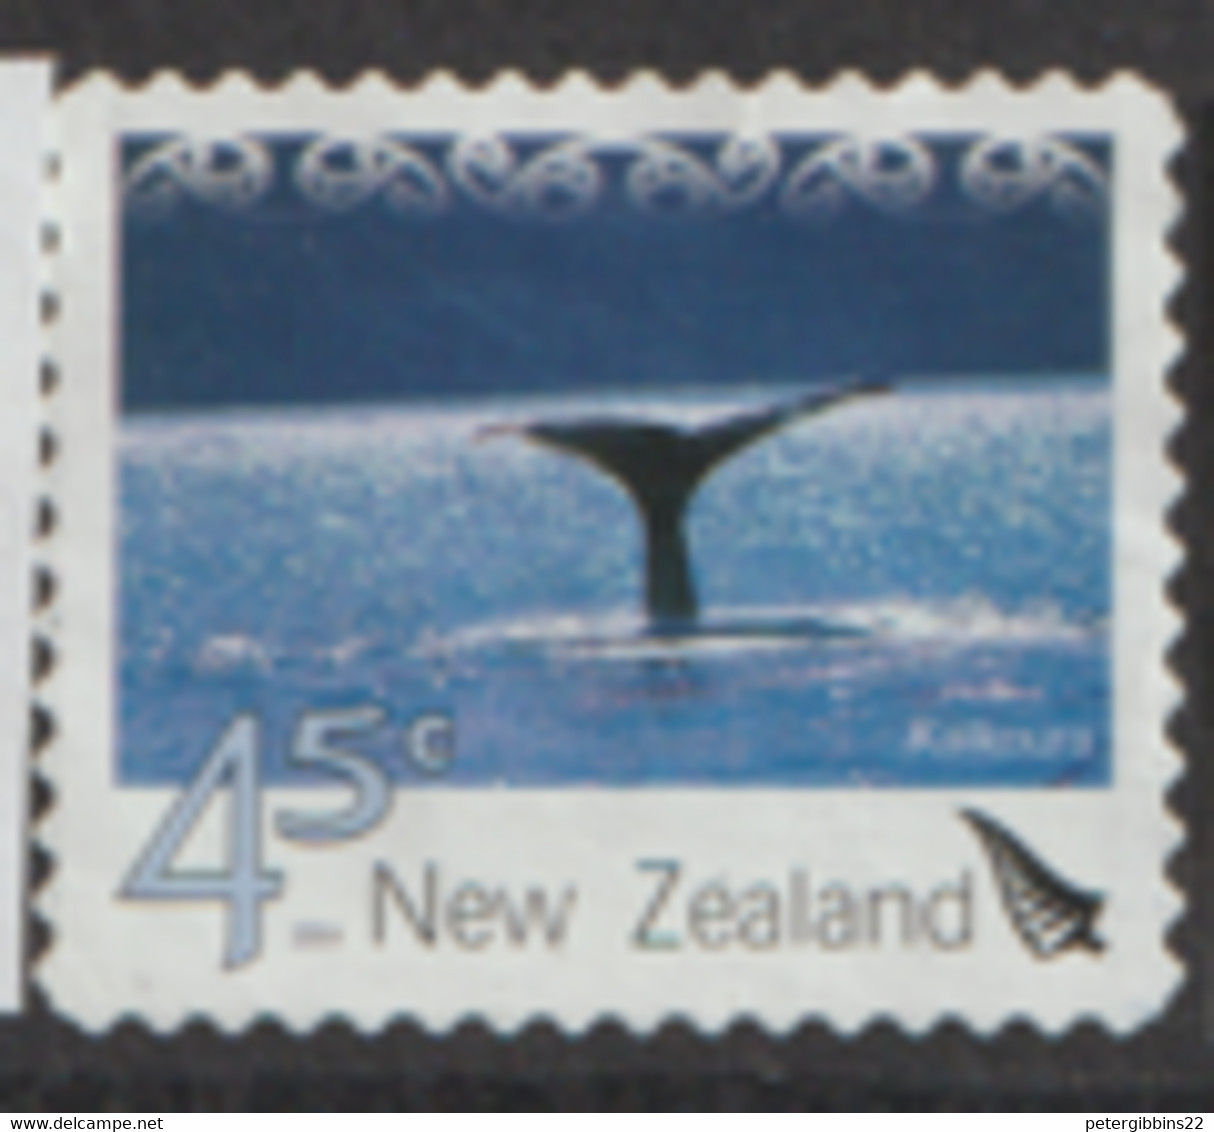 New Zealand  2003   SG  2600  Whale   Fine Used - Gebraucht